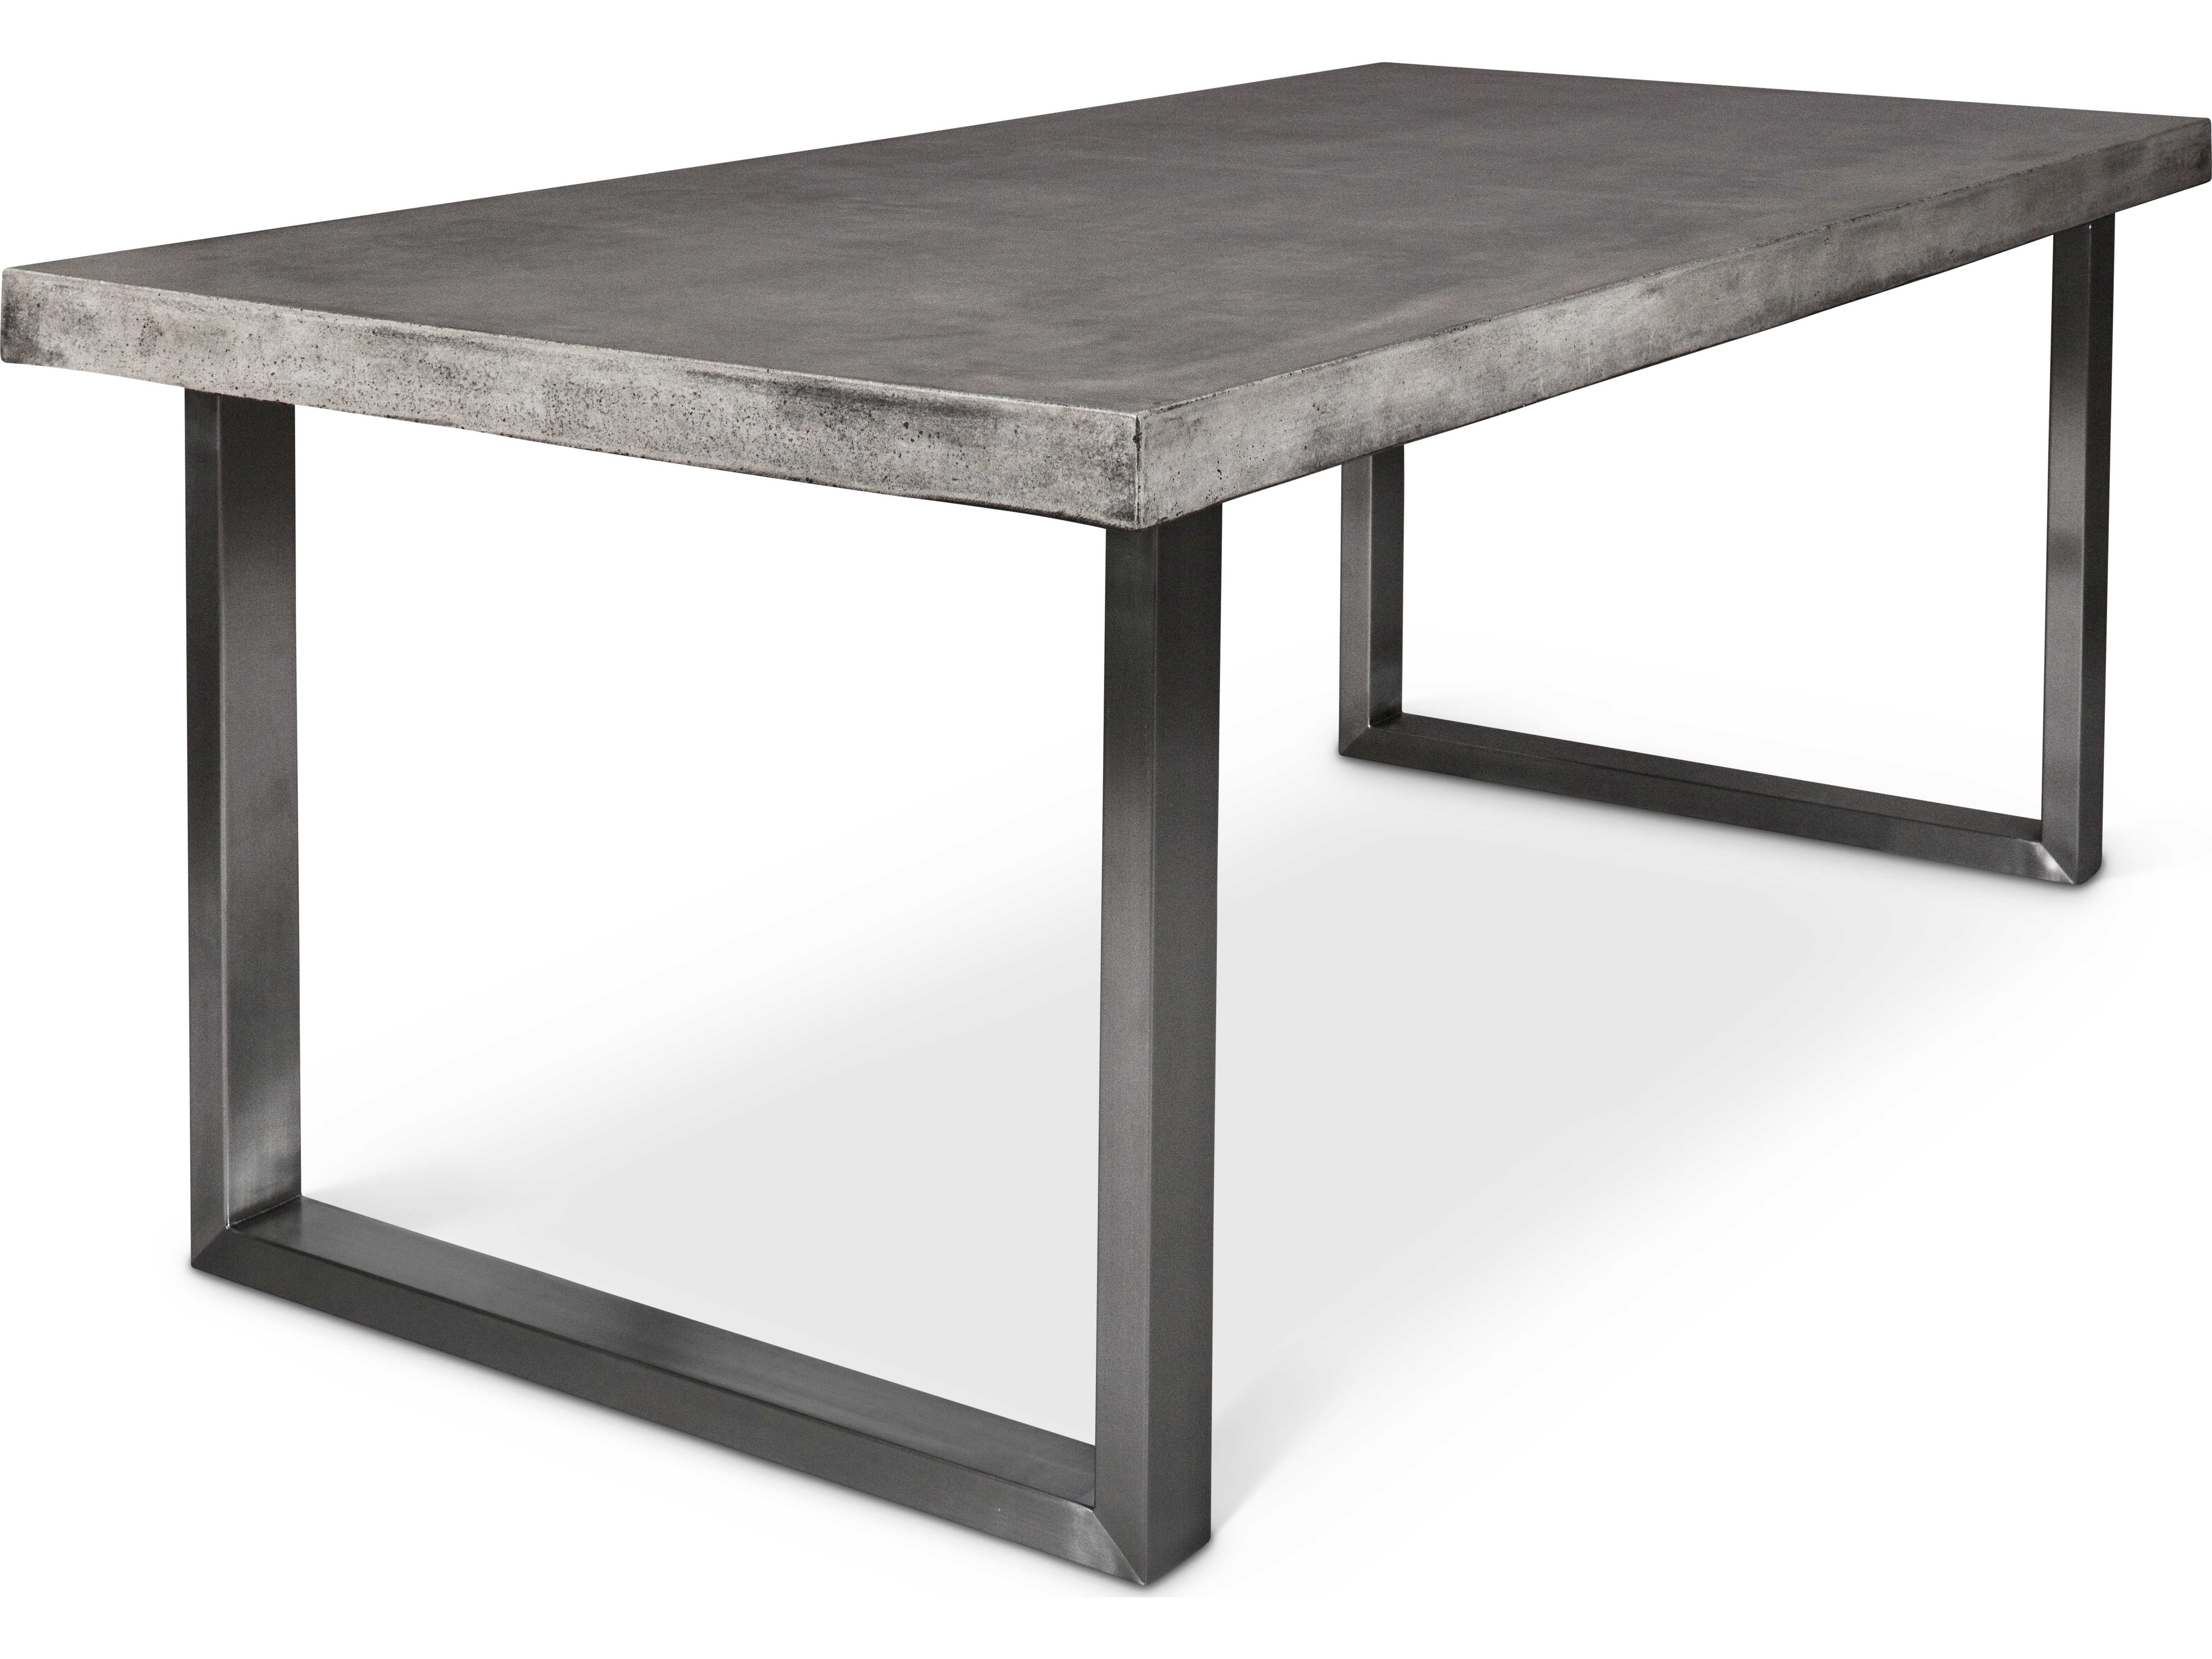 Urbia Miller Dark Grey Brushed, Rectangular Dining Room Table